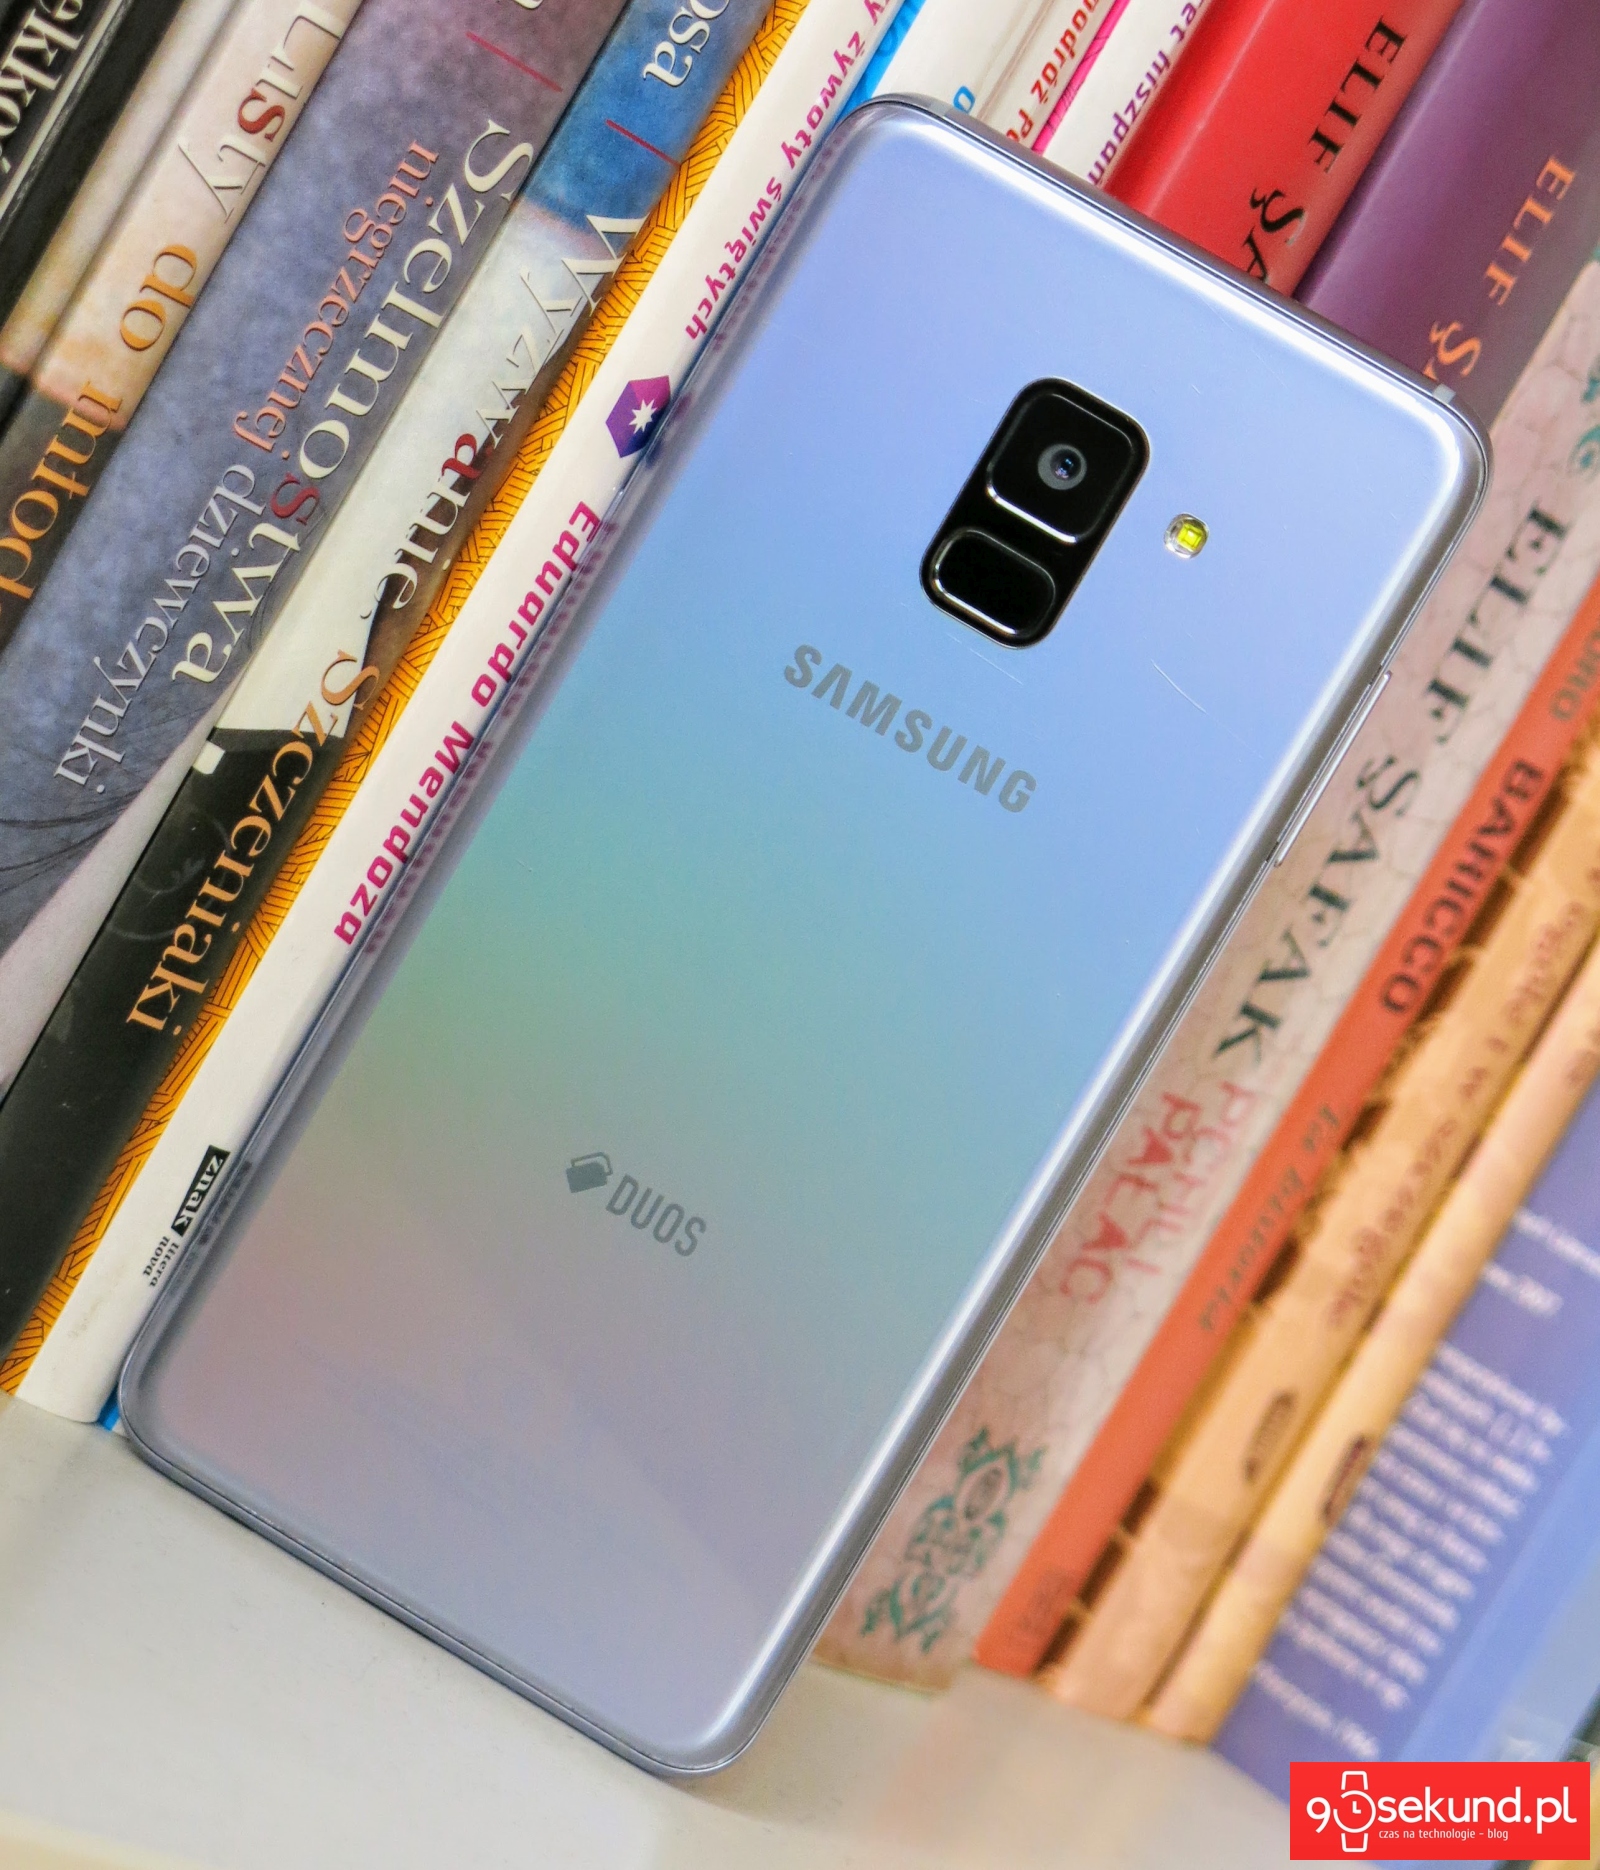 Recenzja Samsunga Galaxy A8 (SM-A530F) - 90sekund.pl